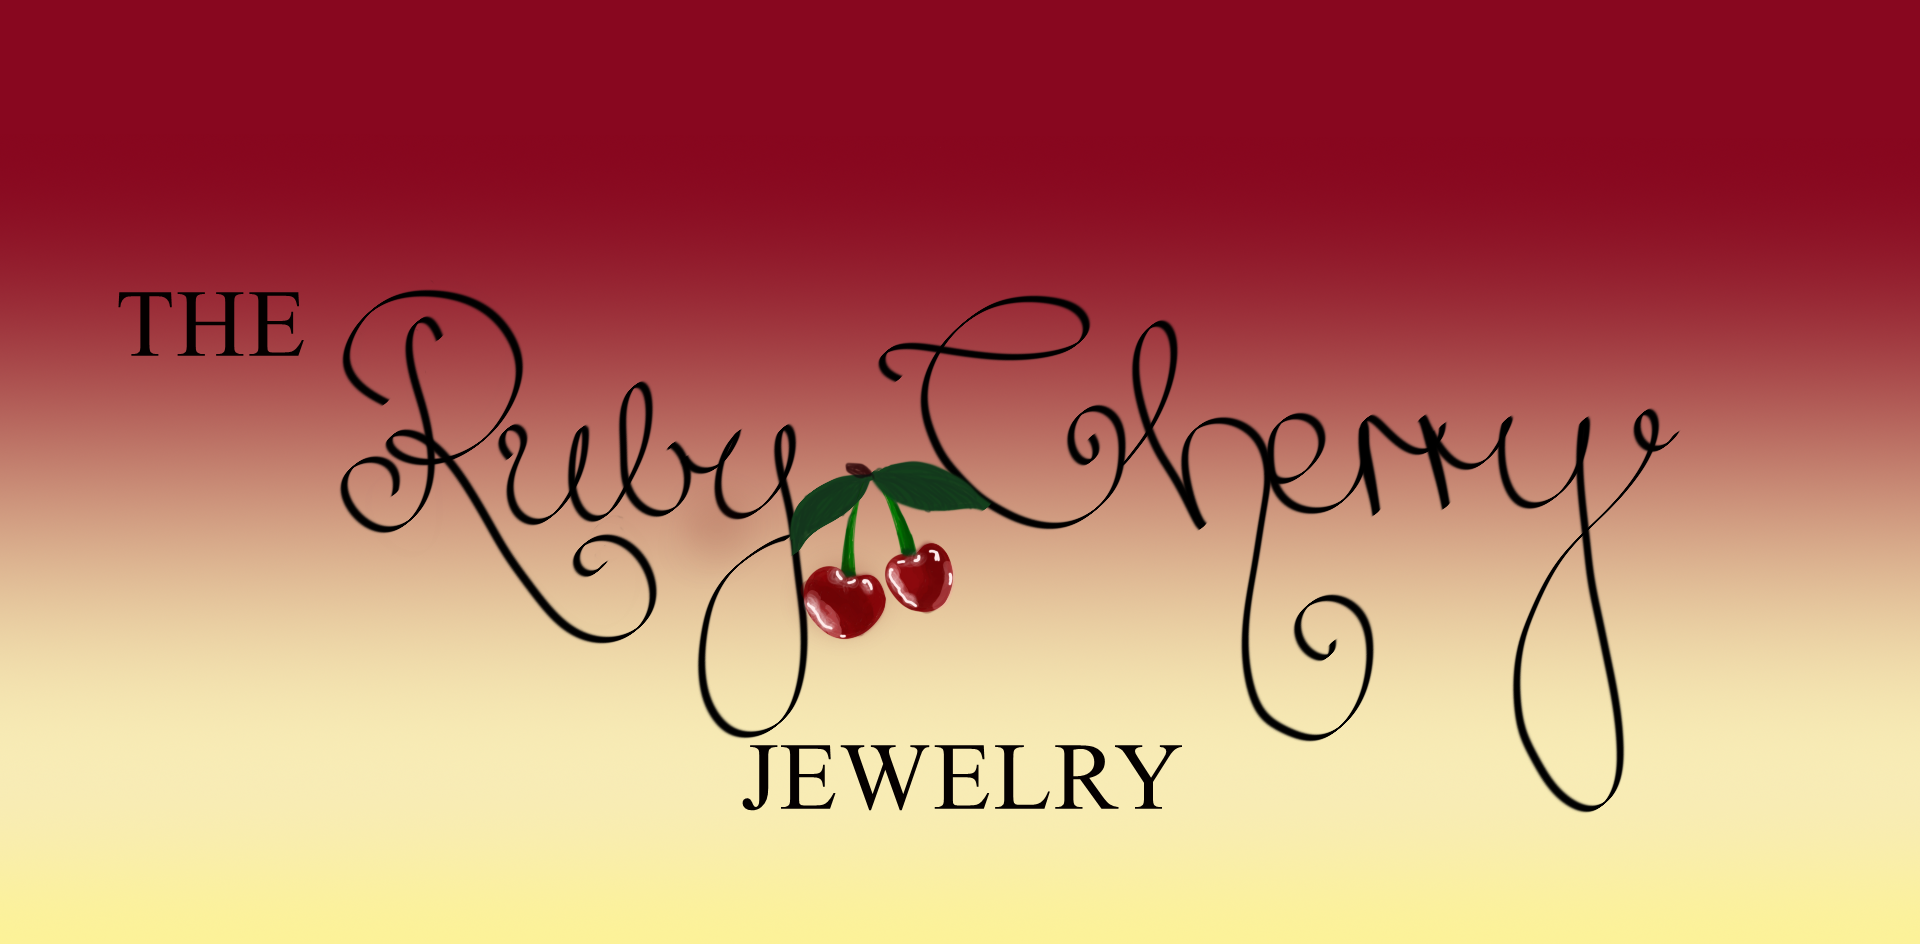 The RubyCherry Jewelry